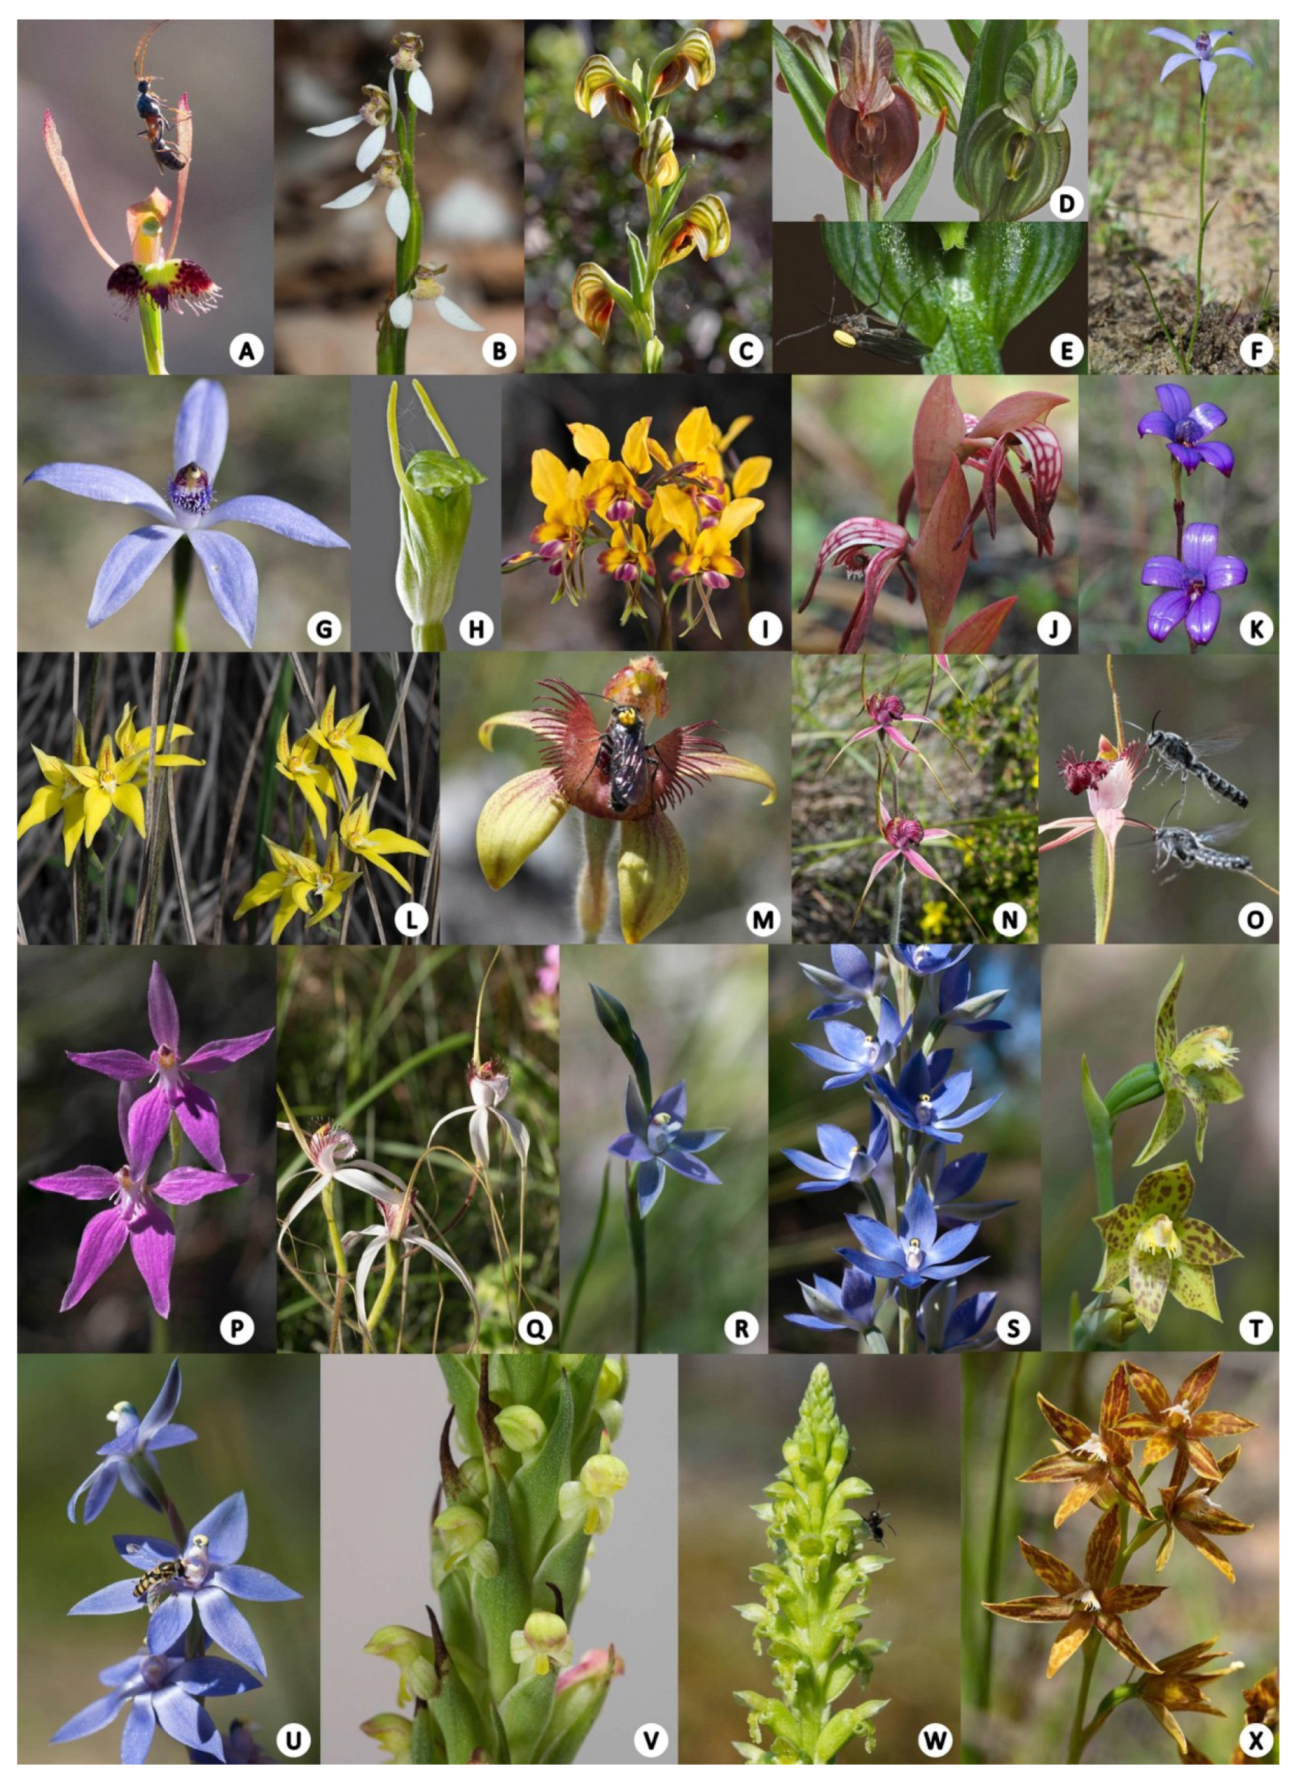 III. Types of Pollination